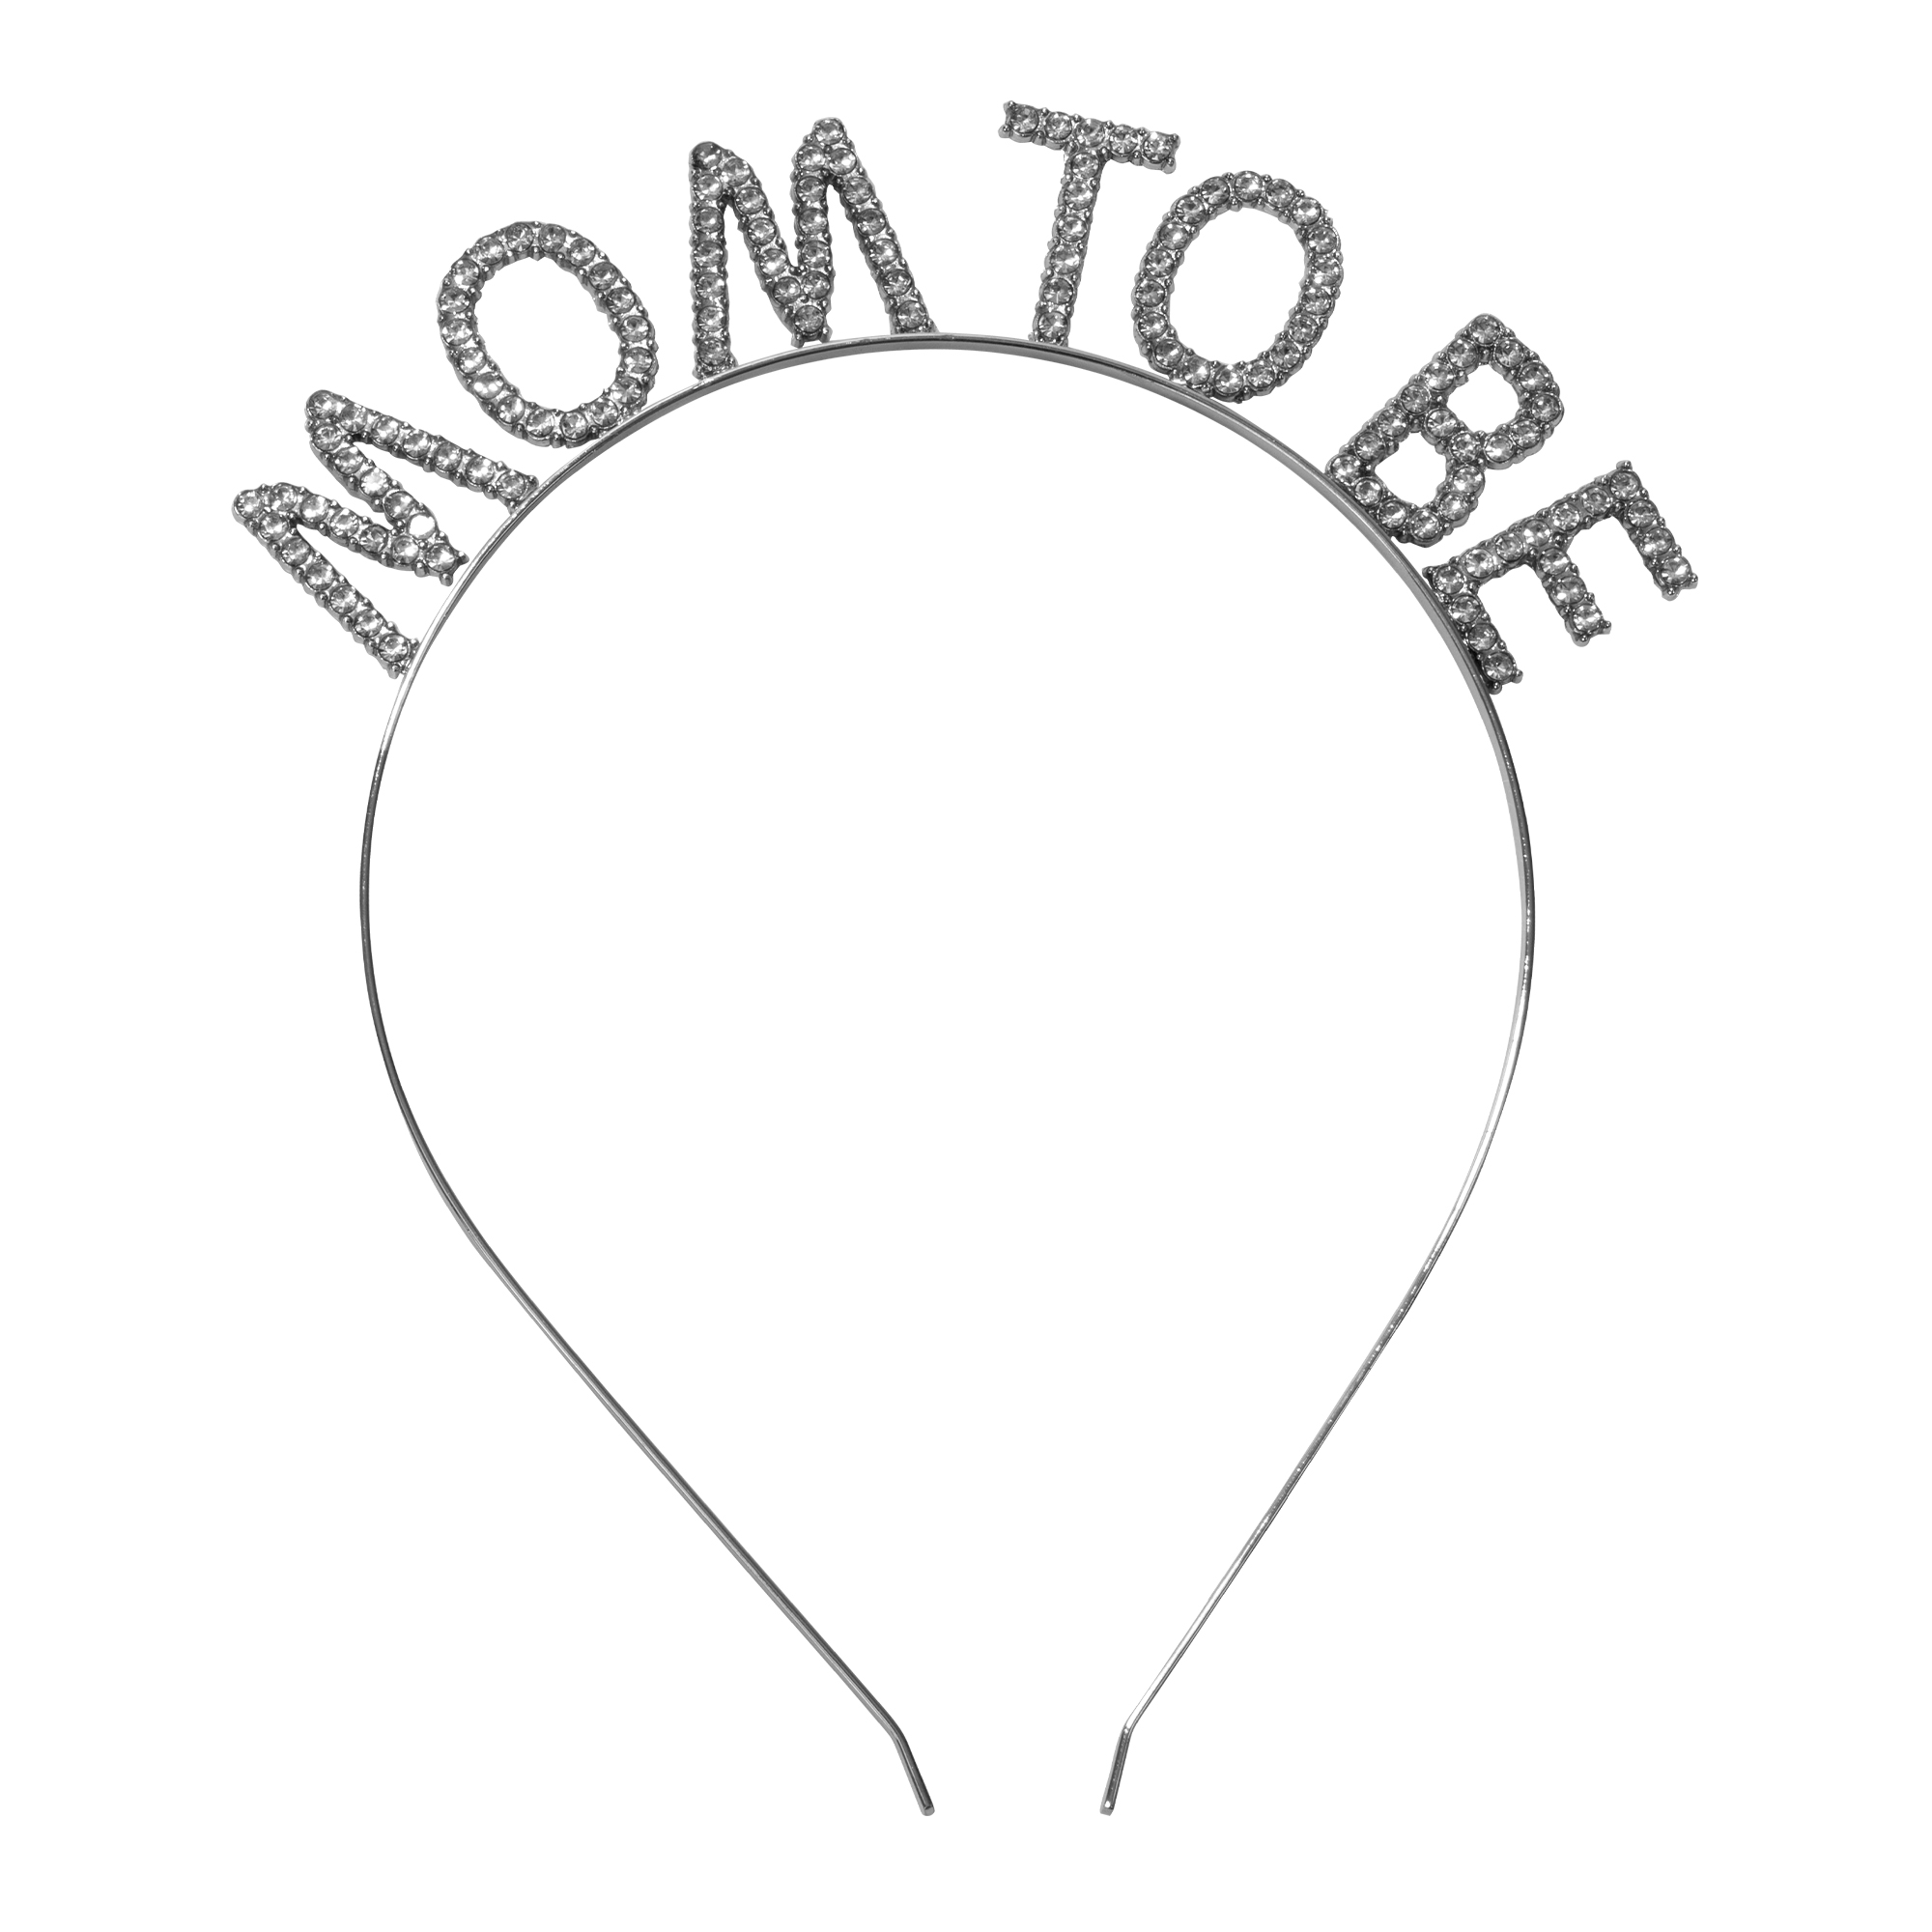 Headband "MOM TO BE" With Rhinestone 1" - Silver